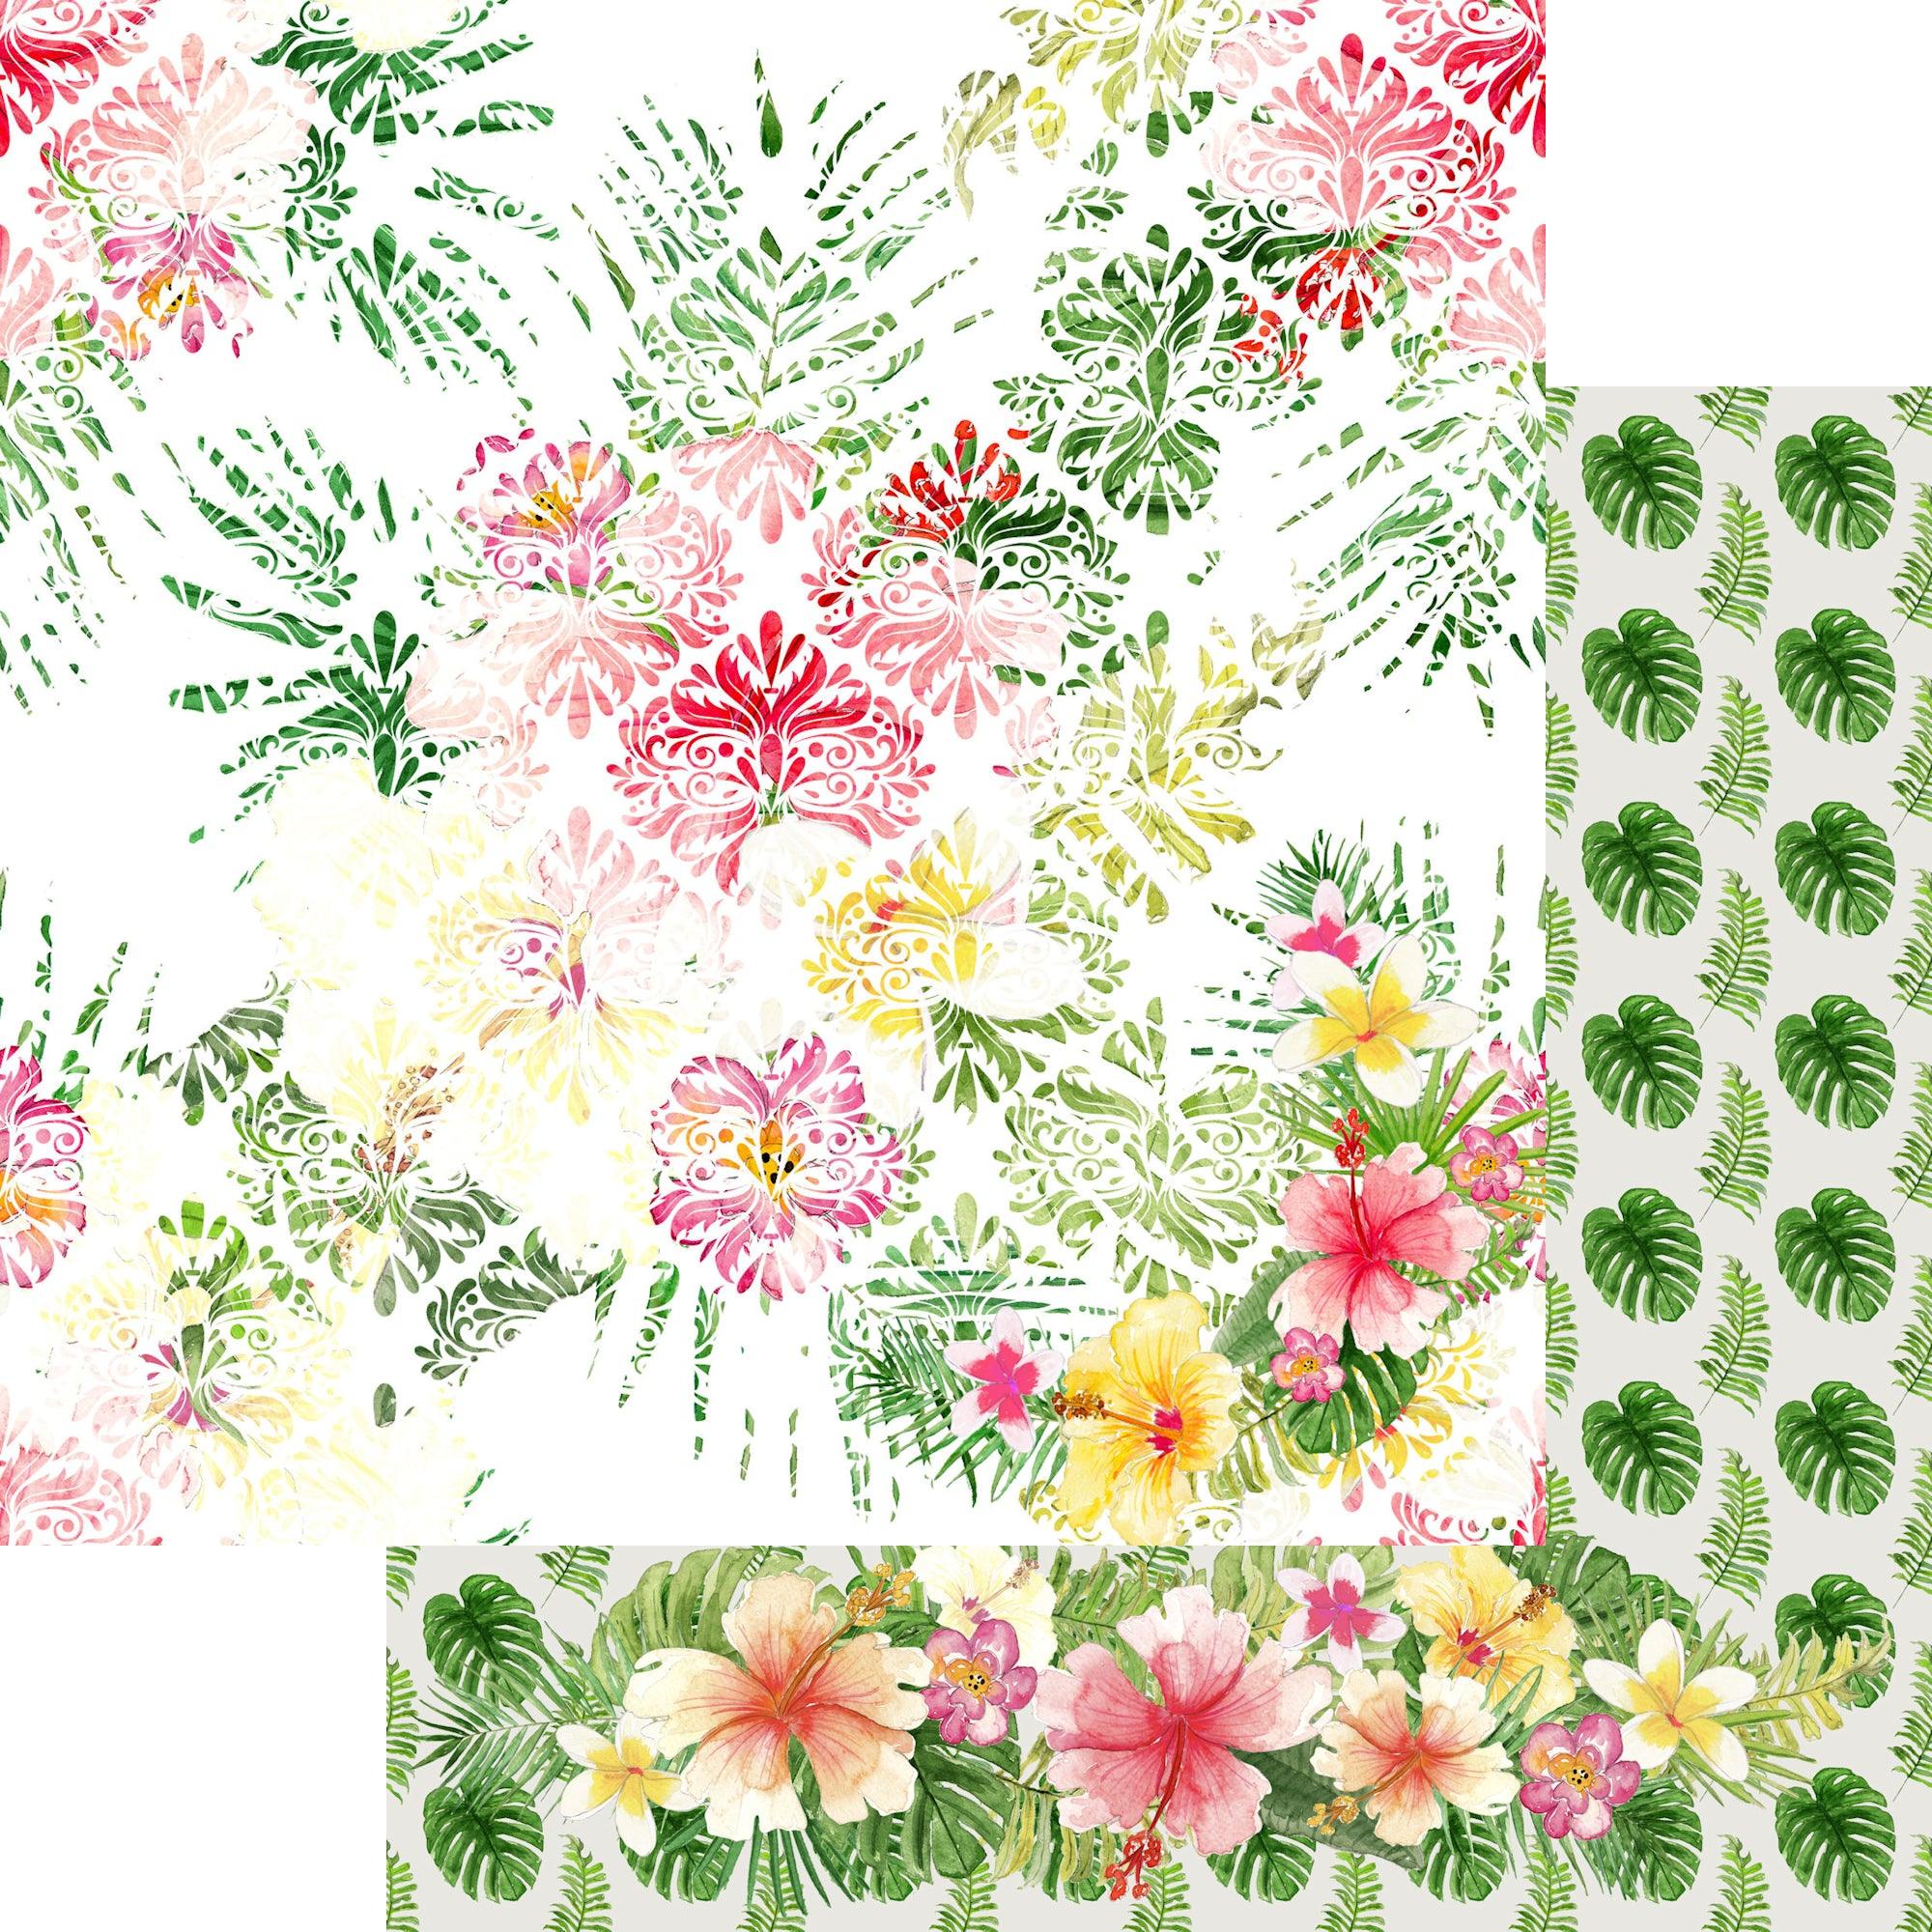 Aloha, Hawaii 12 x 12 Scrapbook Paper & Embellishment Kit by SSC Designs - Scrapbook Supply Companies